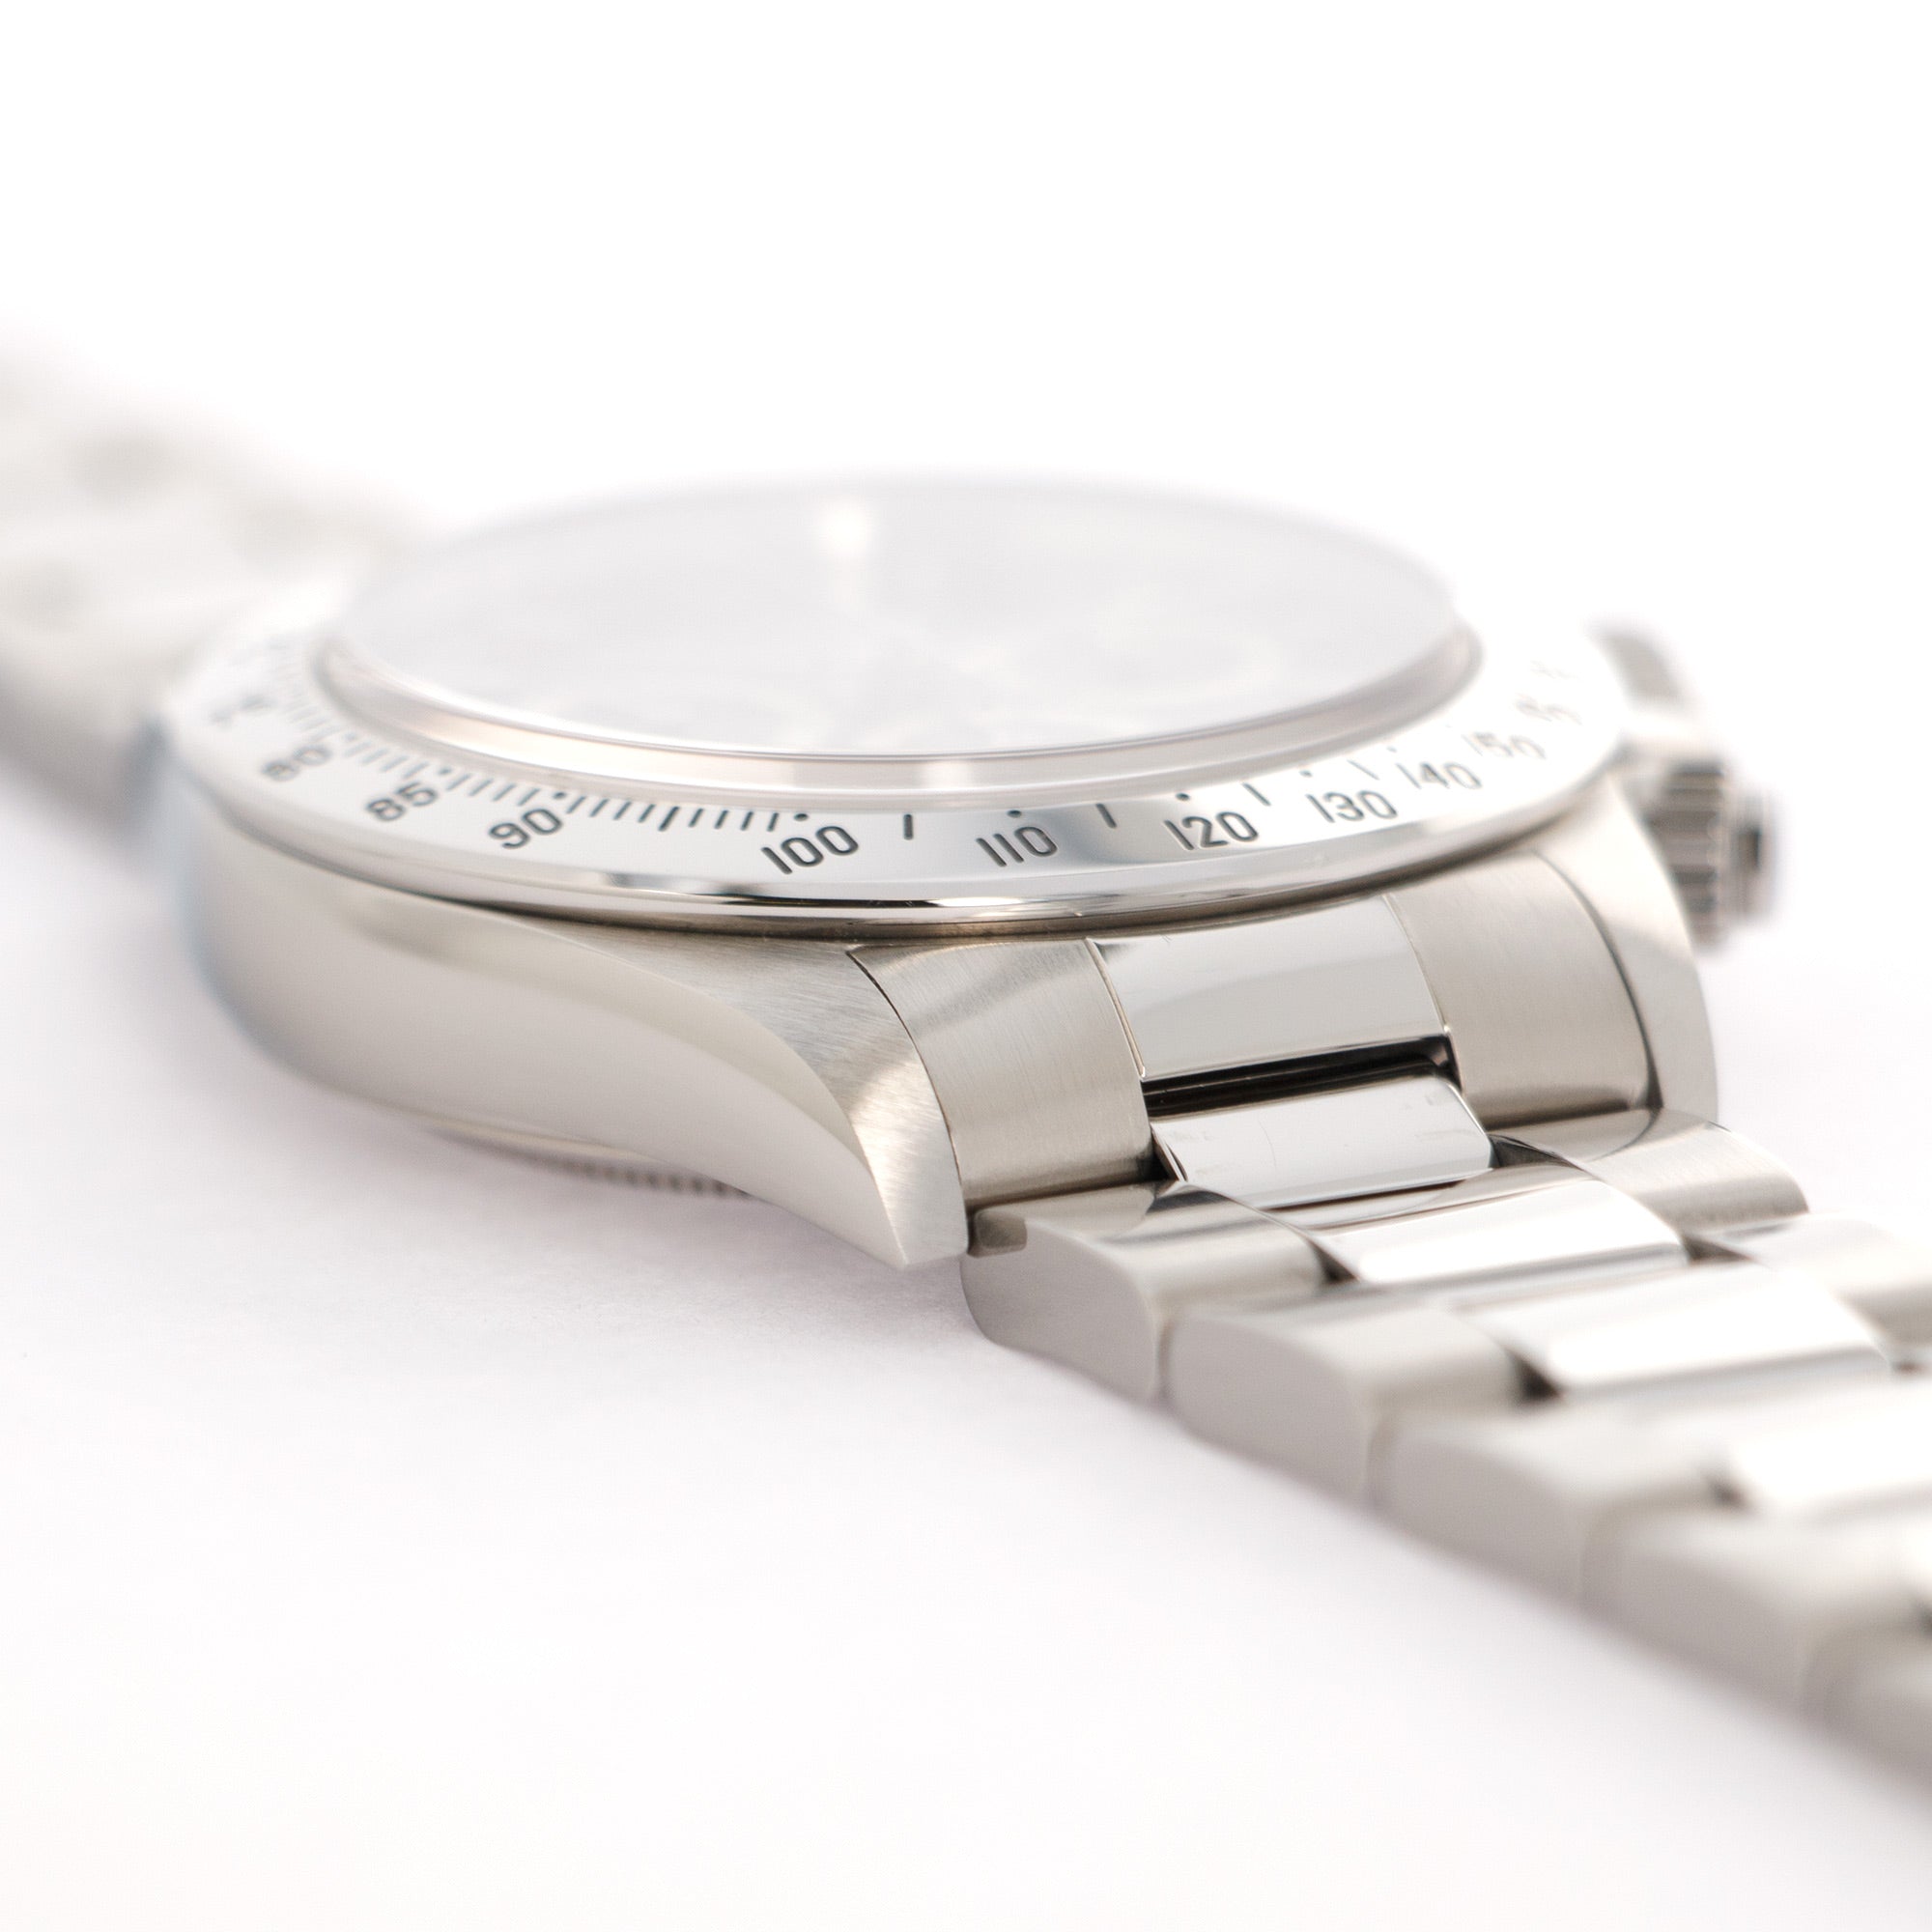 Rolex - Rolex Cosmograph Daytona Zenith Watch Ref. 16520 with Original Warranty Paper - The Keystone Watches